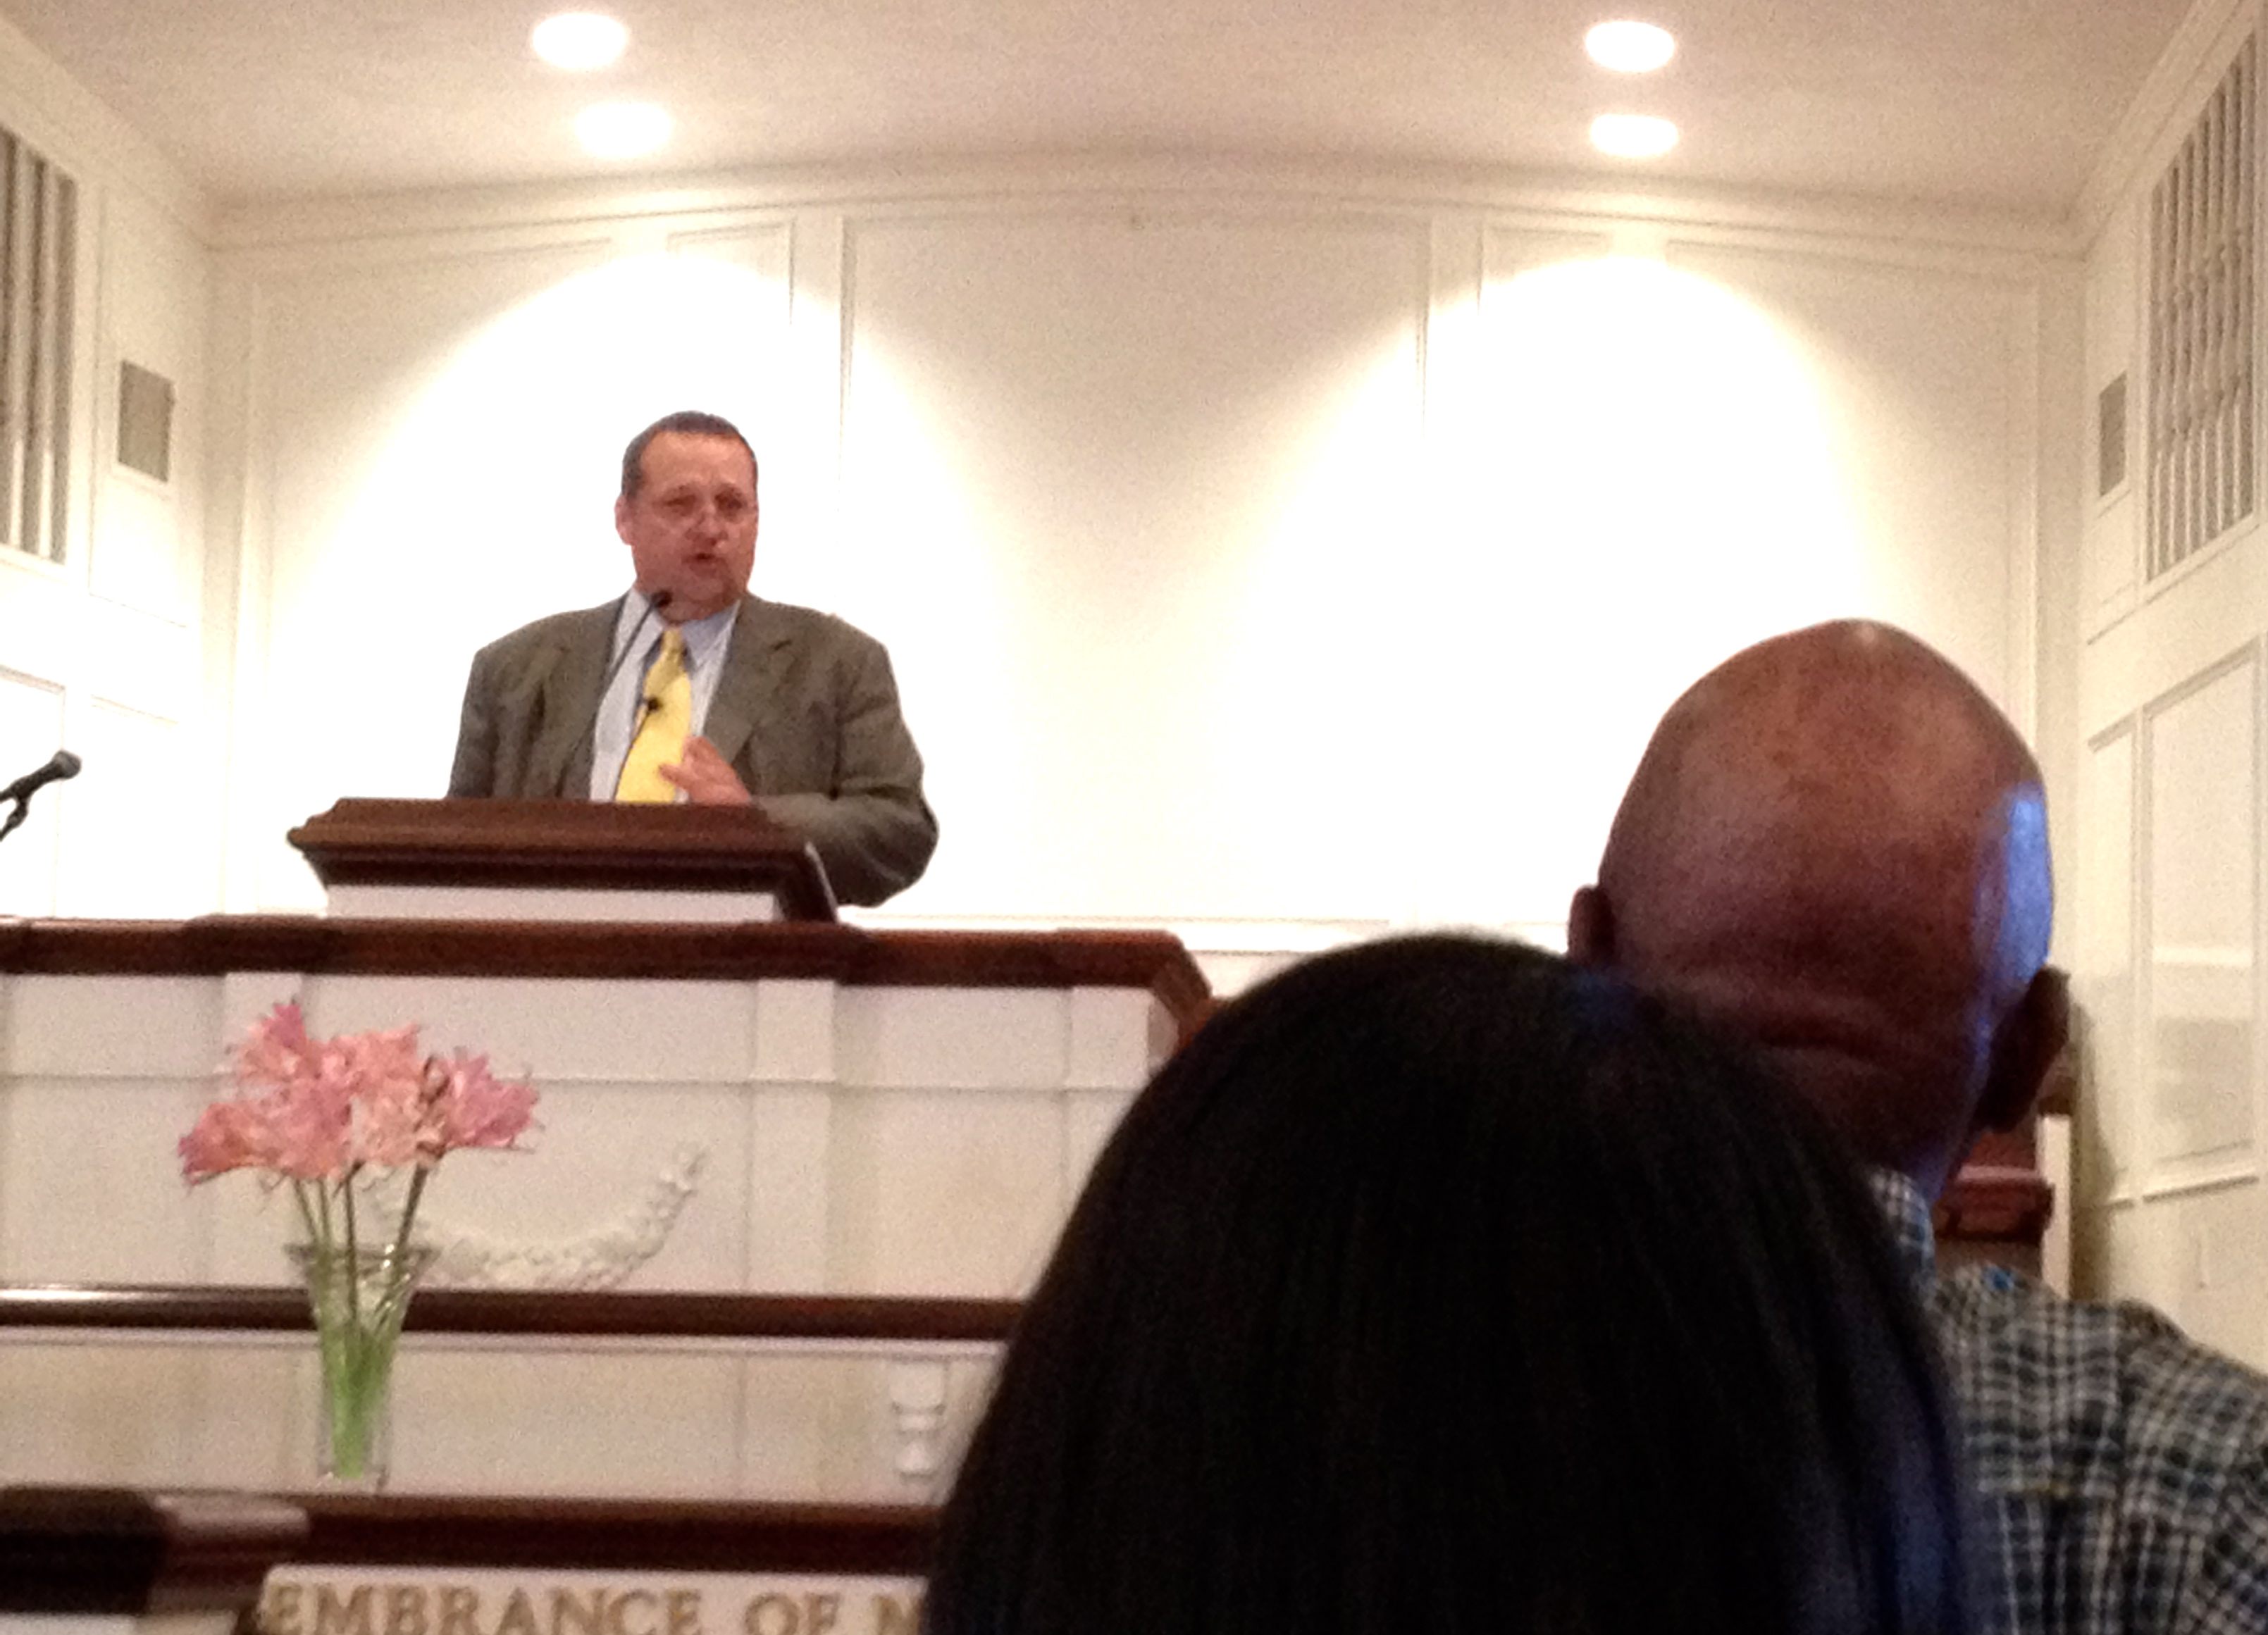 Dr. Ben Taylor preaching at Timonium